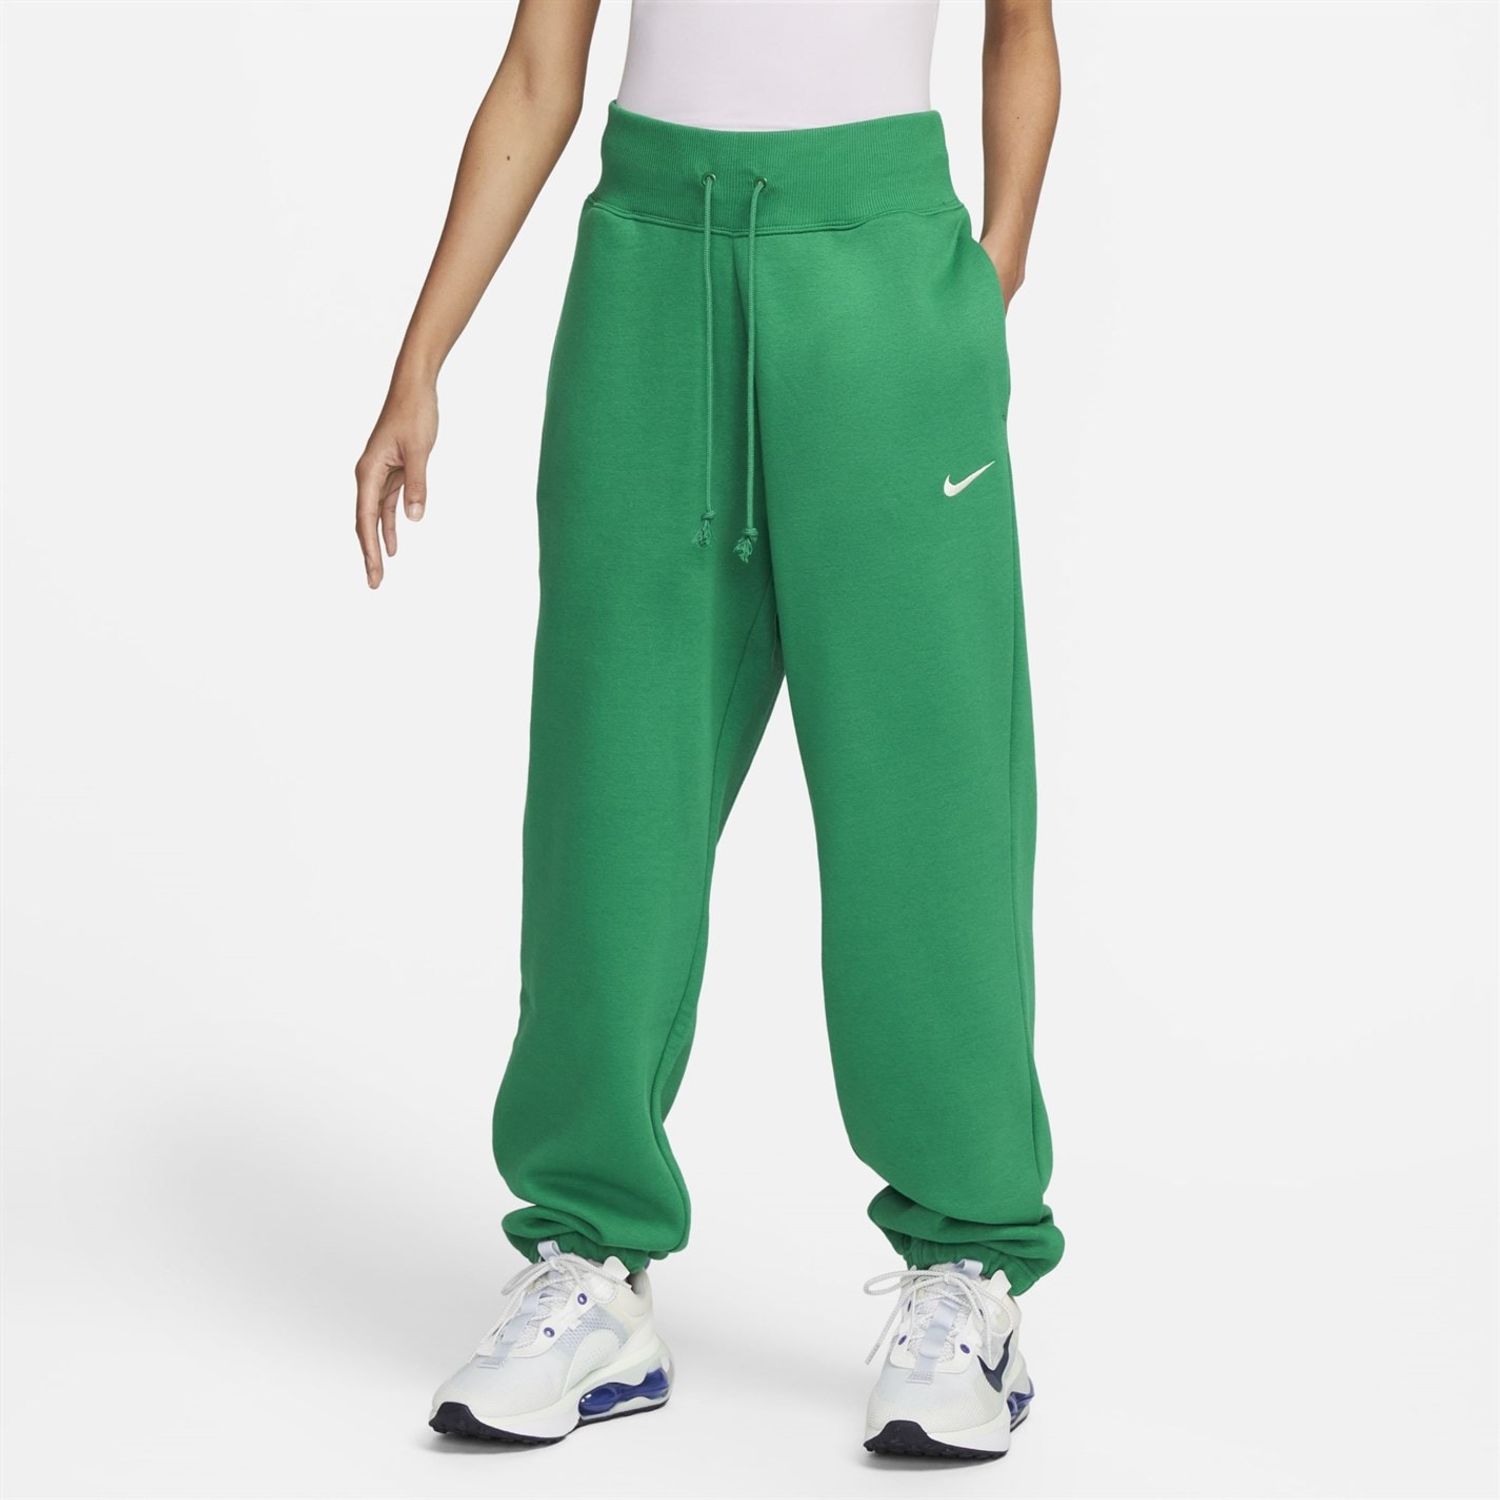 NEW Women's Size Medium Nike Sportswear Sweatpants Green Olive Cuffed  Oversized